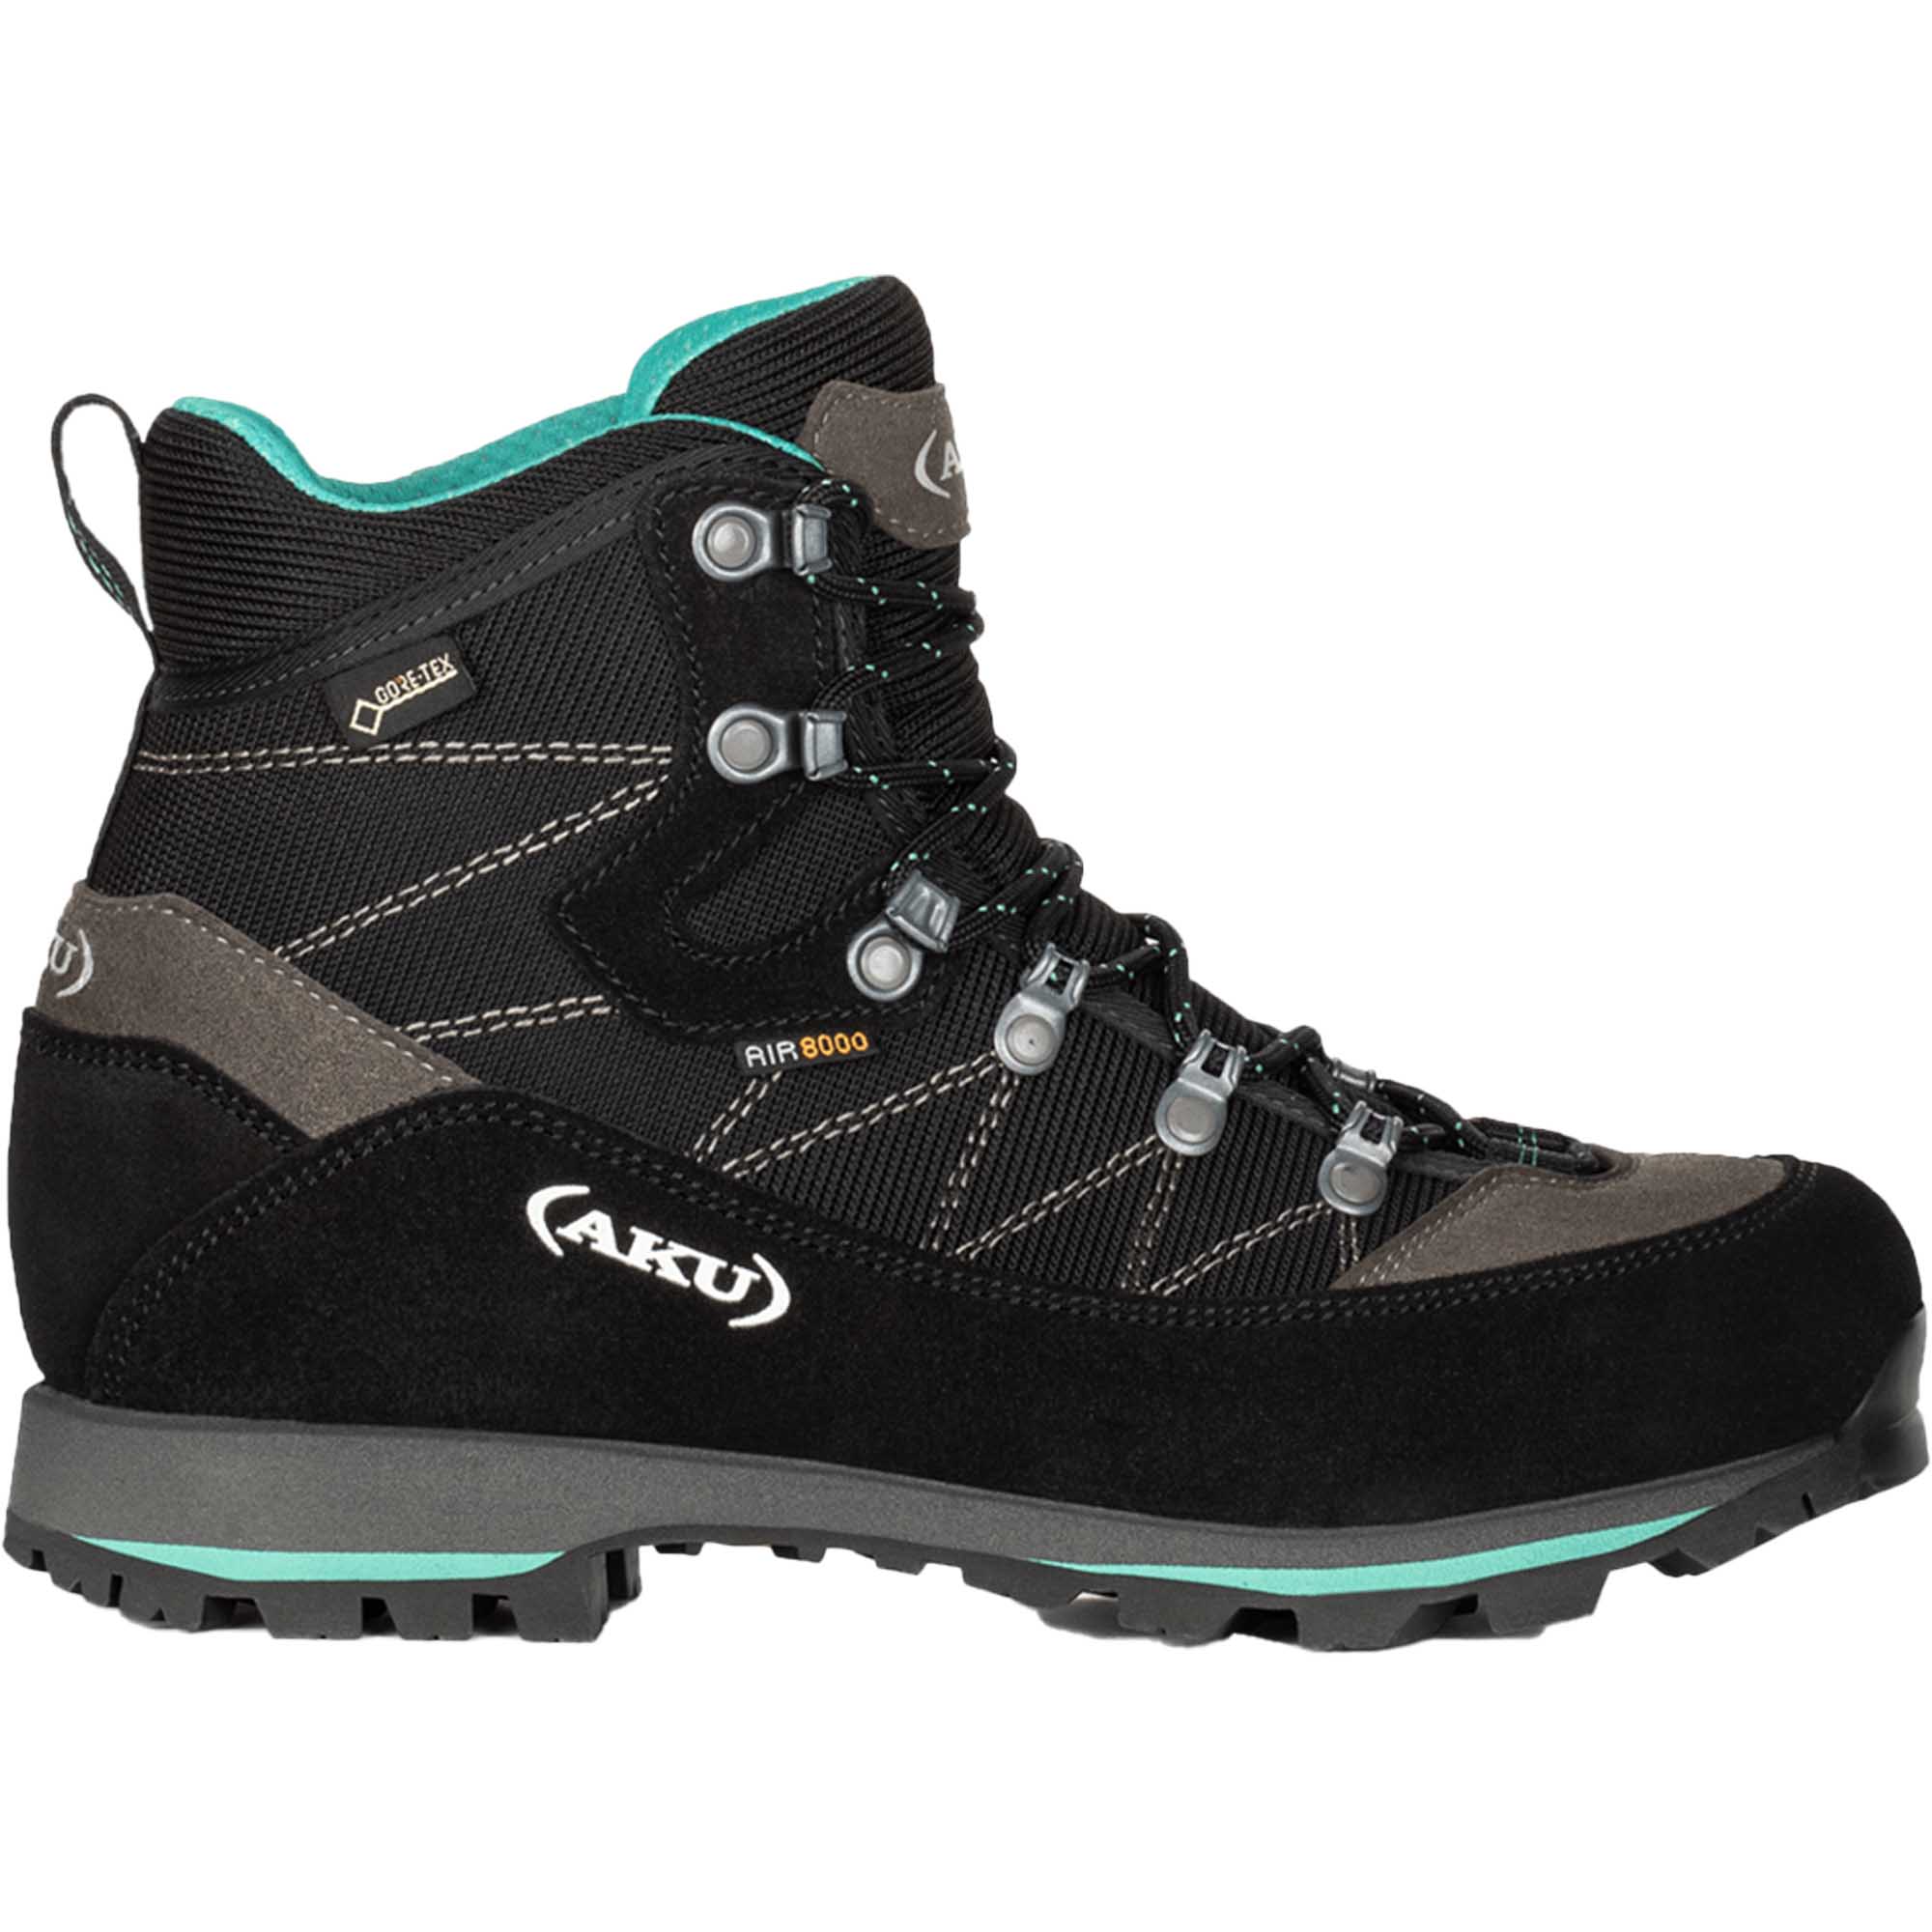 Aku Trekker Lite III GTX Wide Women's Hiking Boots